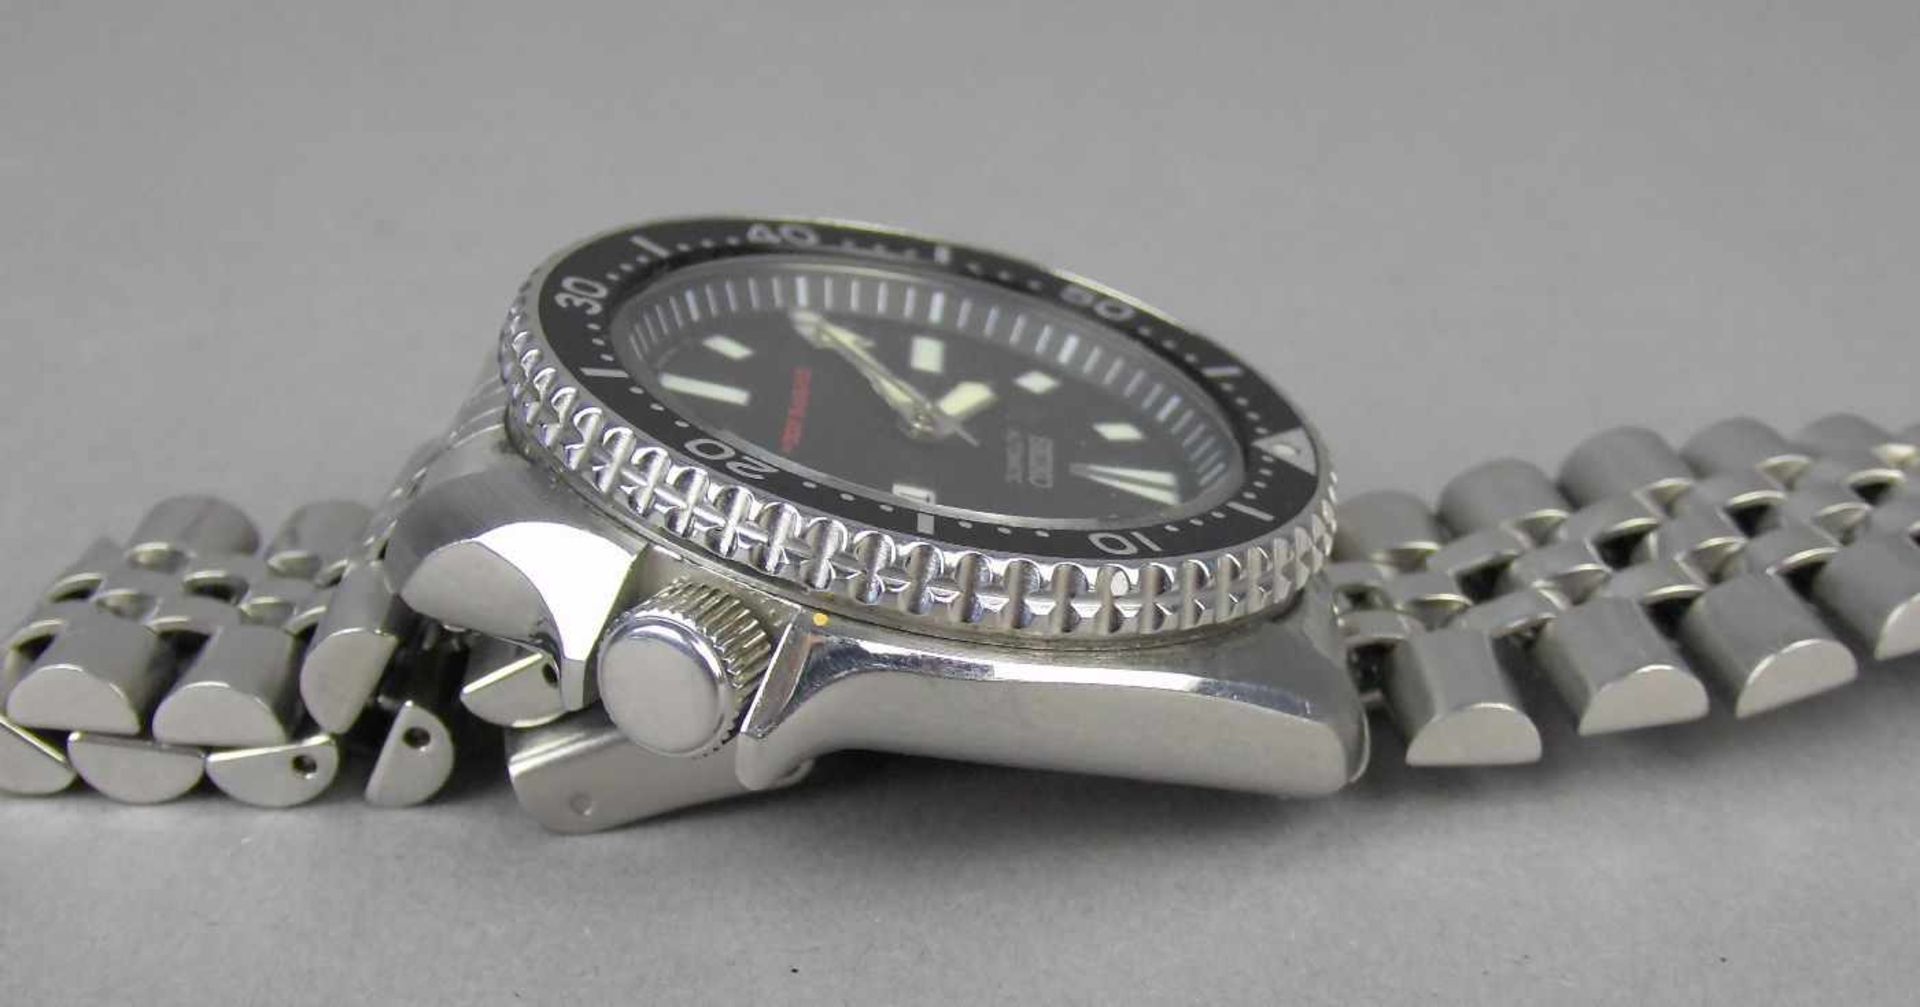 ARMBANDUHR / TAUCHERUHR: SEIKO - 7S26 - 112X R 2 / wristwatch, Automatik-Uhr, Japan, Stahlgehäuse - Image 4 of 5